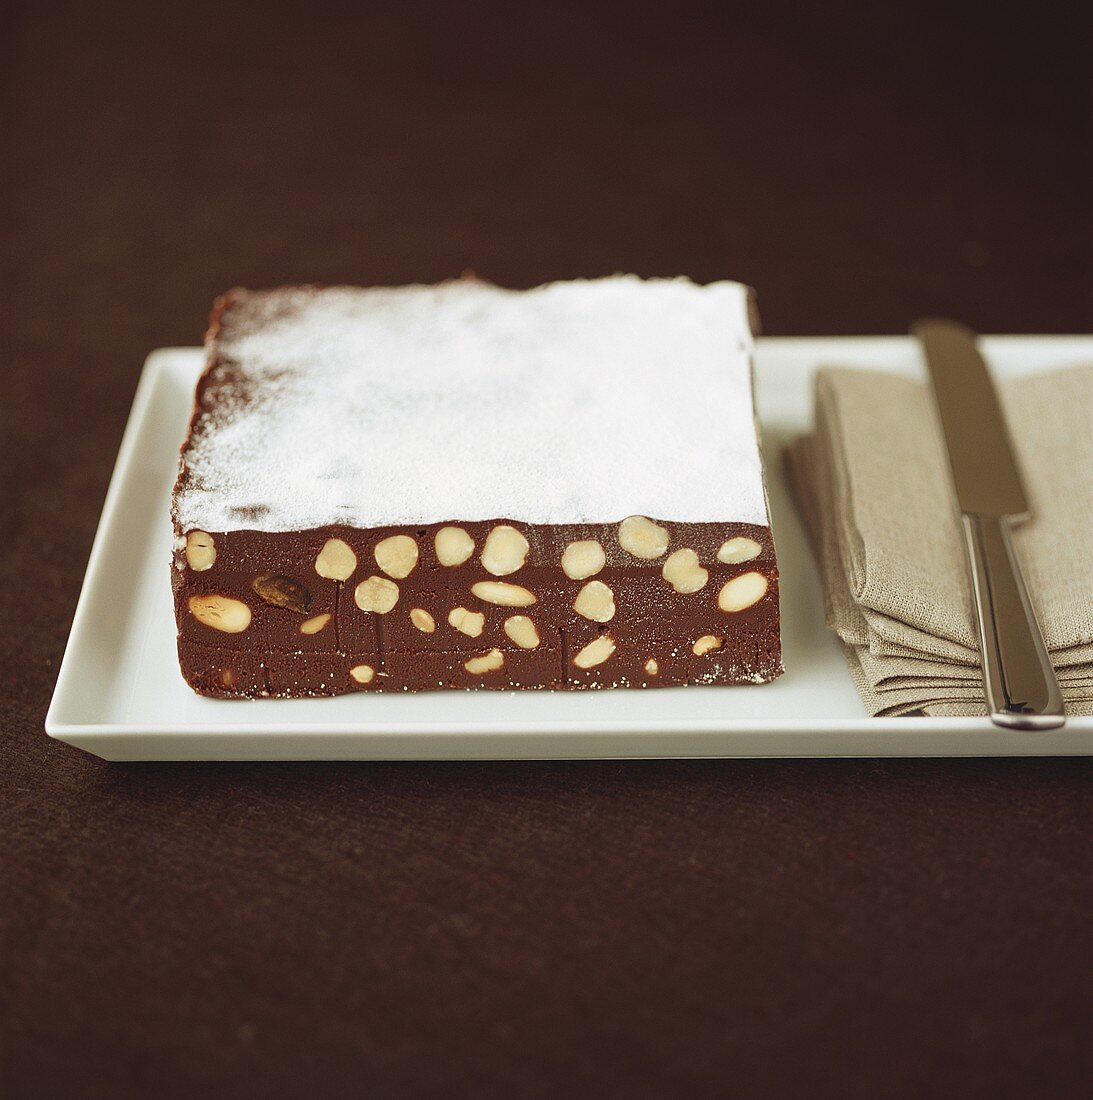 Chocolate nut cake with icing sugar